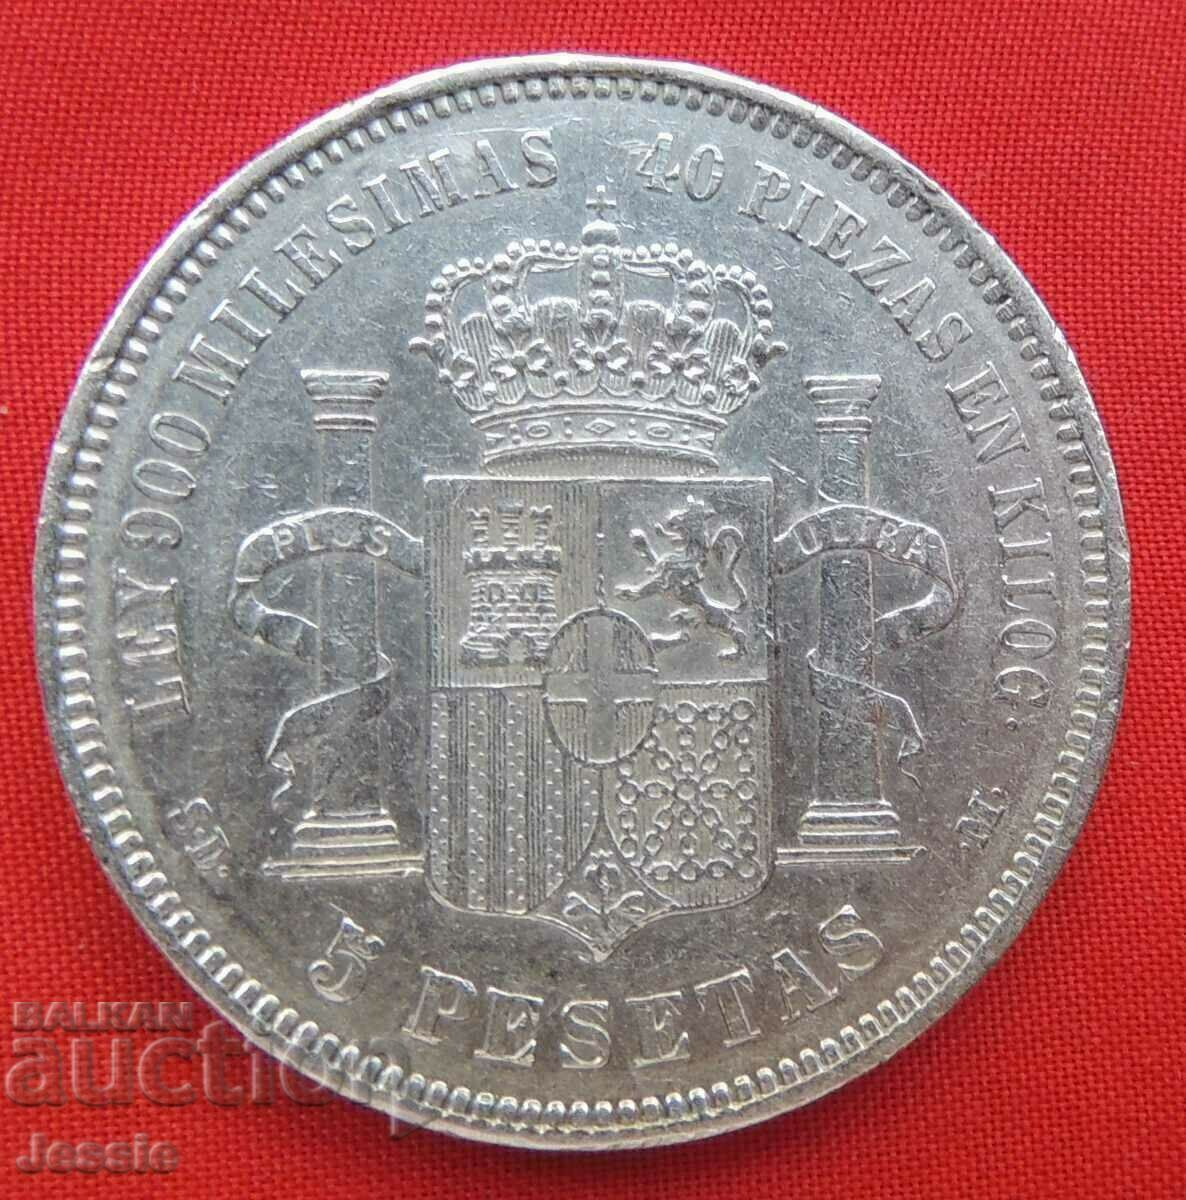 5 Pesetas 1871 SD.M. Spania argint CALITATE